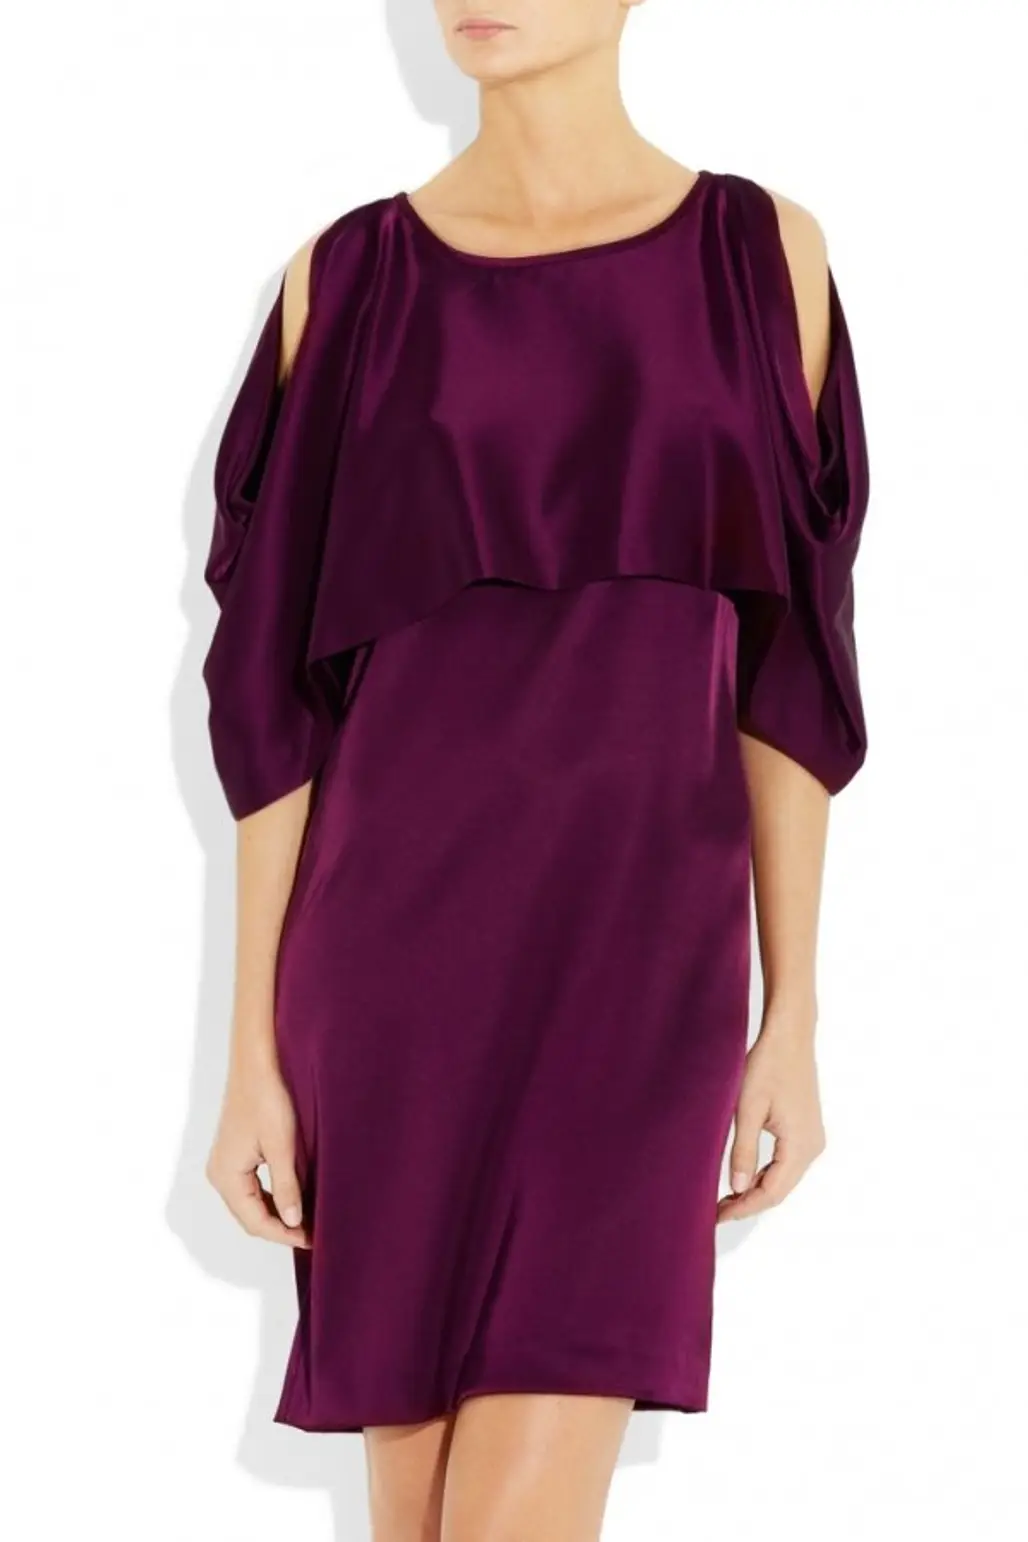 Clothing, Dress, Shoulder, Purple, Cocktail dress,